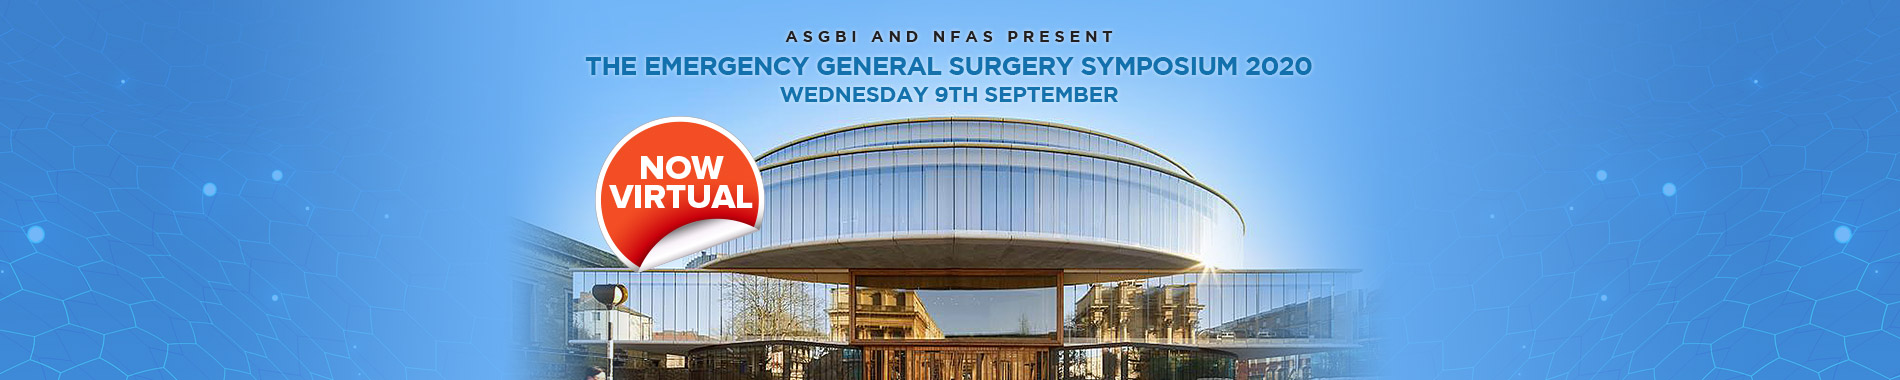 Virtual Emergency General Surgery Symposium 2020